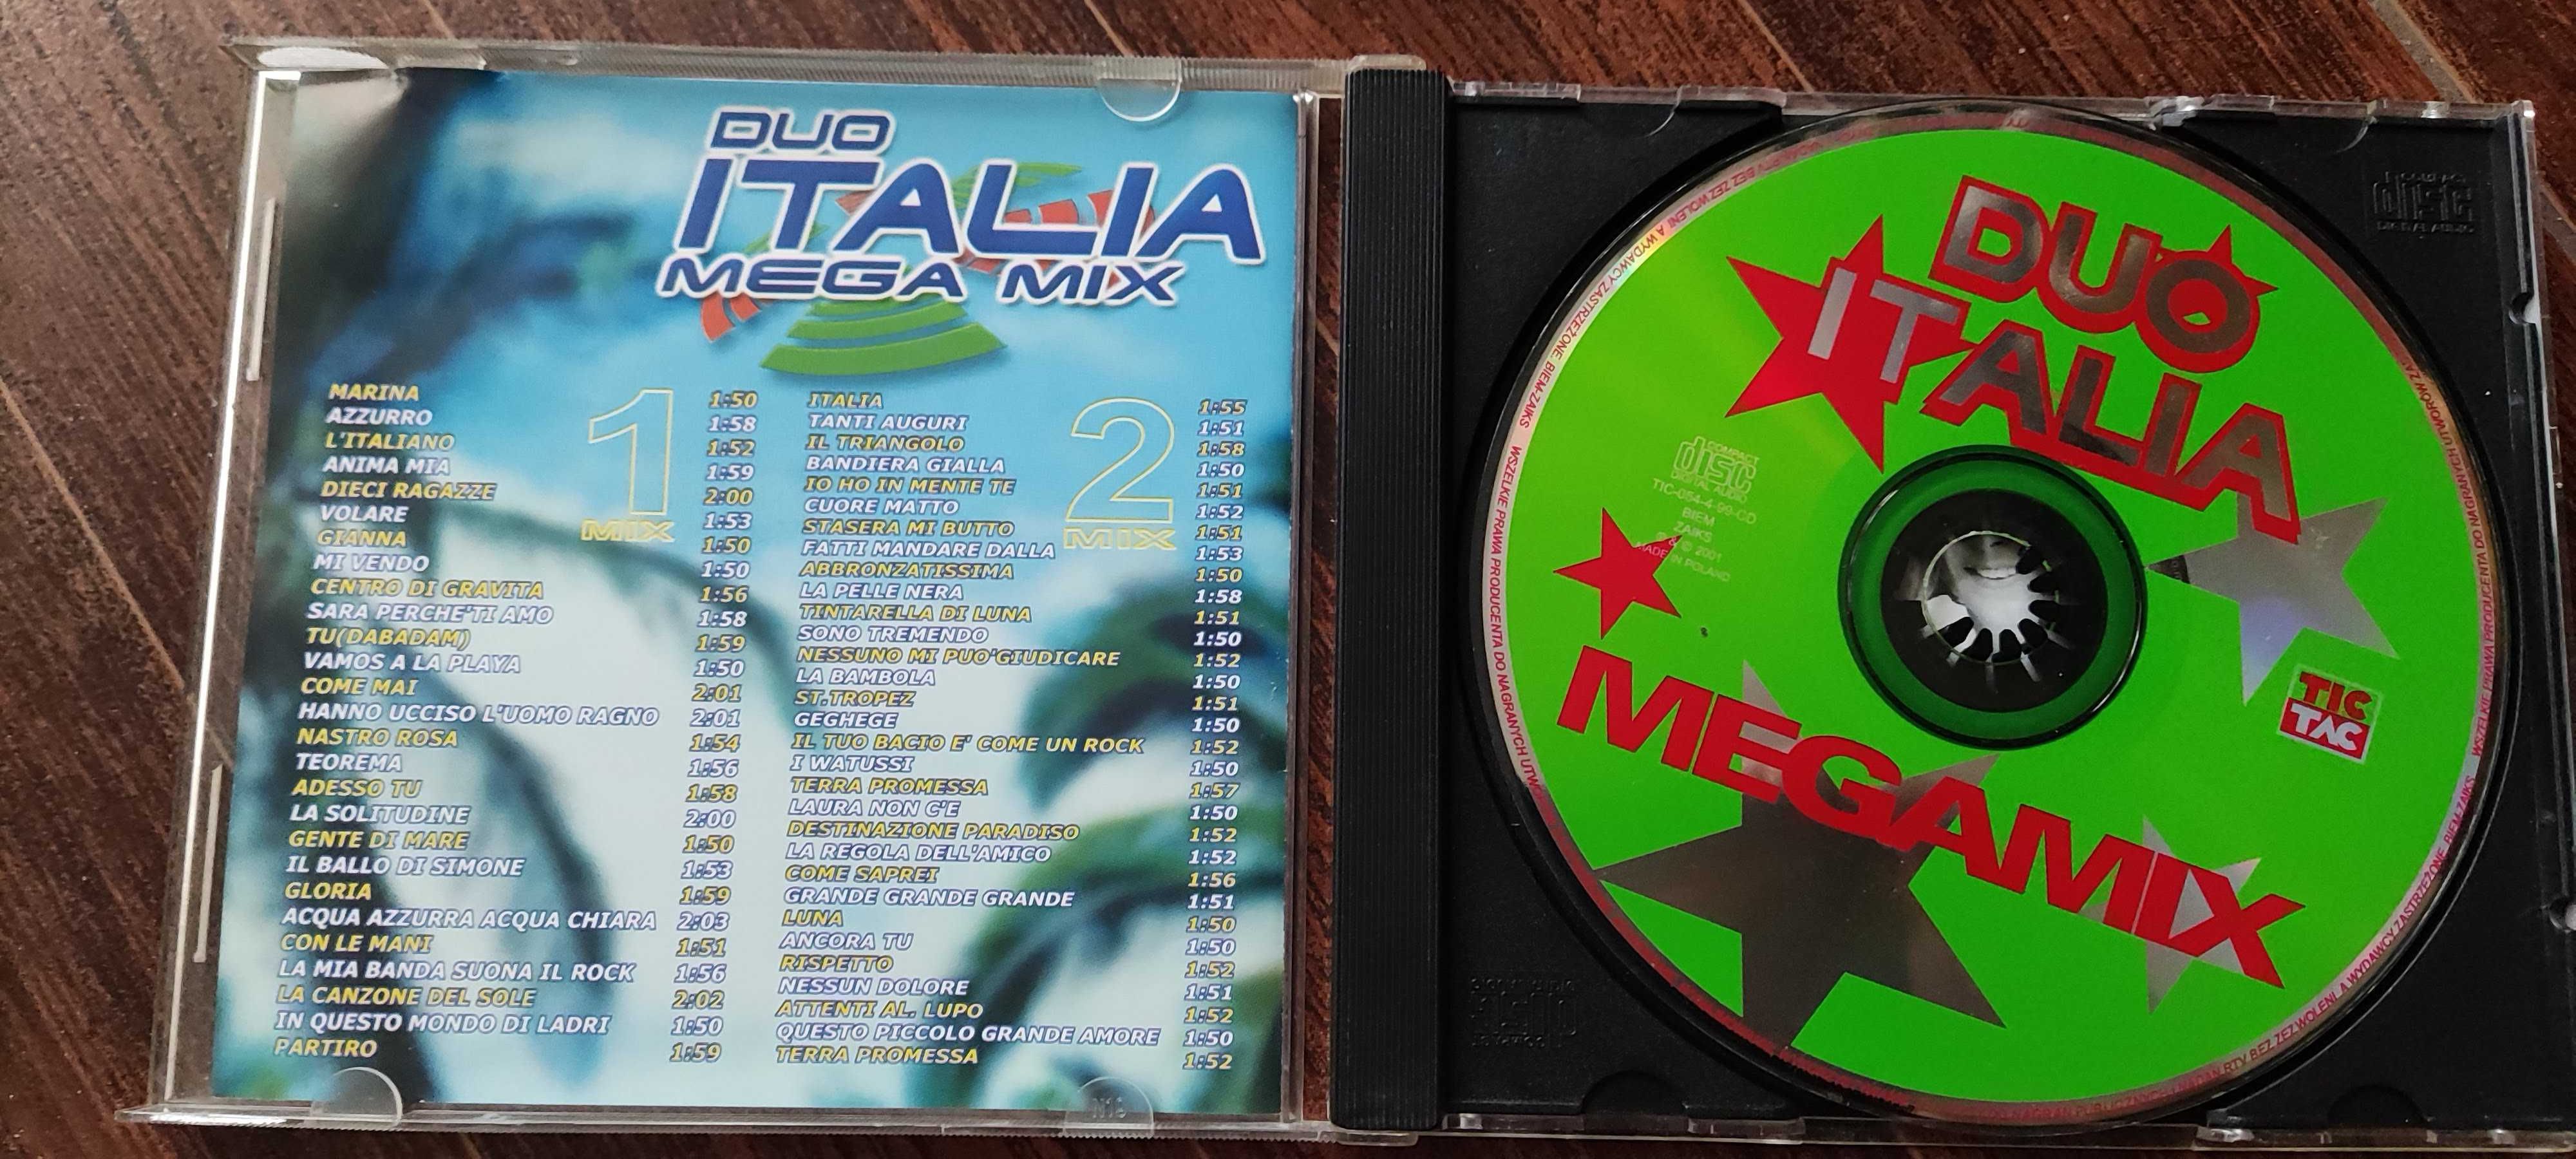 Duo Italia Mega mix